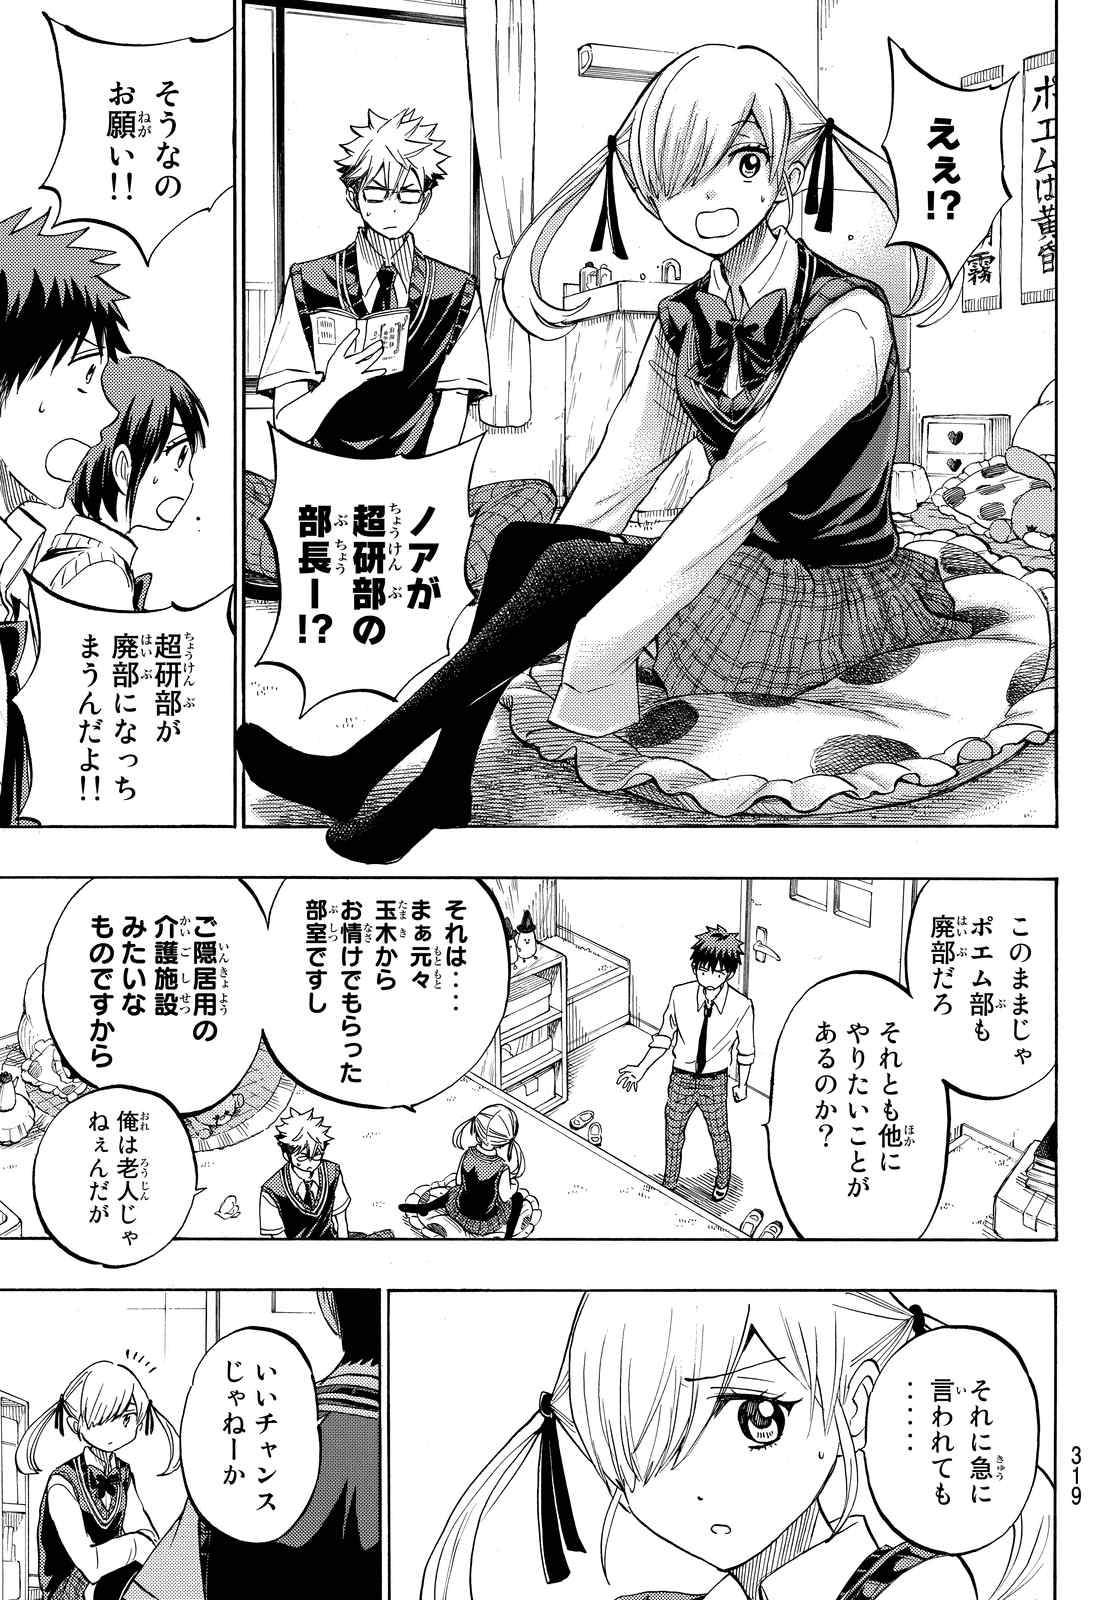 Yamada-kun to 7-nin no Majo - Chapter 232 - Page 15